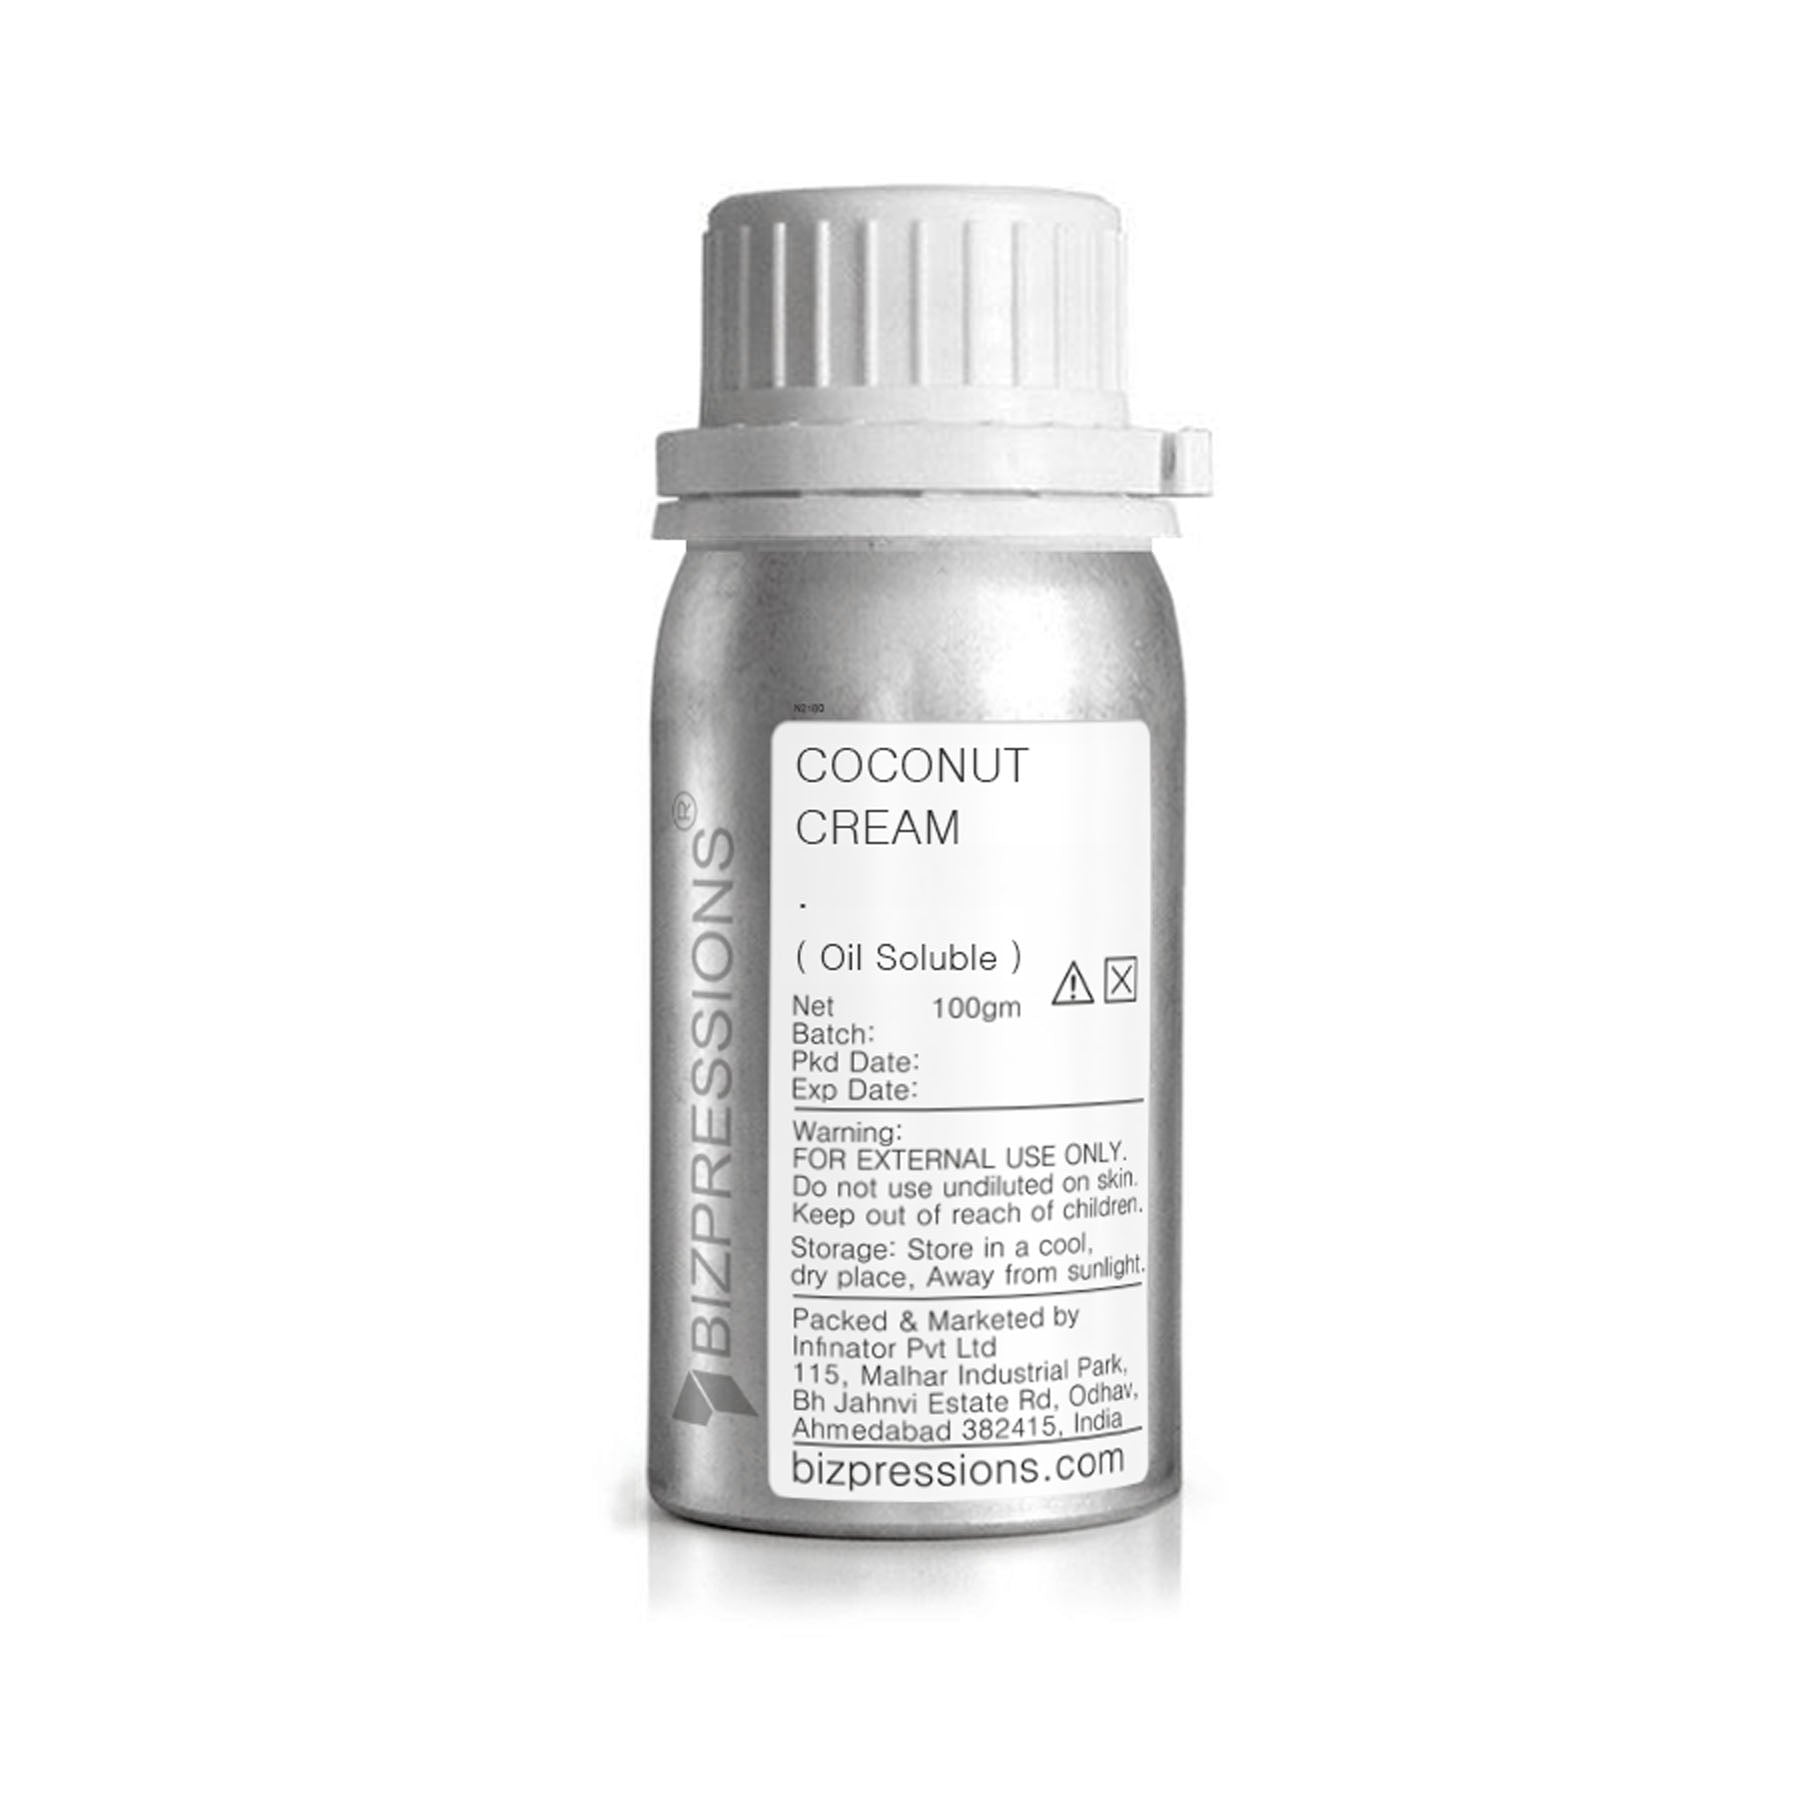 COCONUT CREAM - Fragrance ( Oil Soluble ) - 100 gm